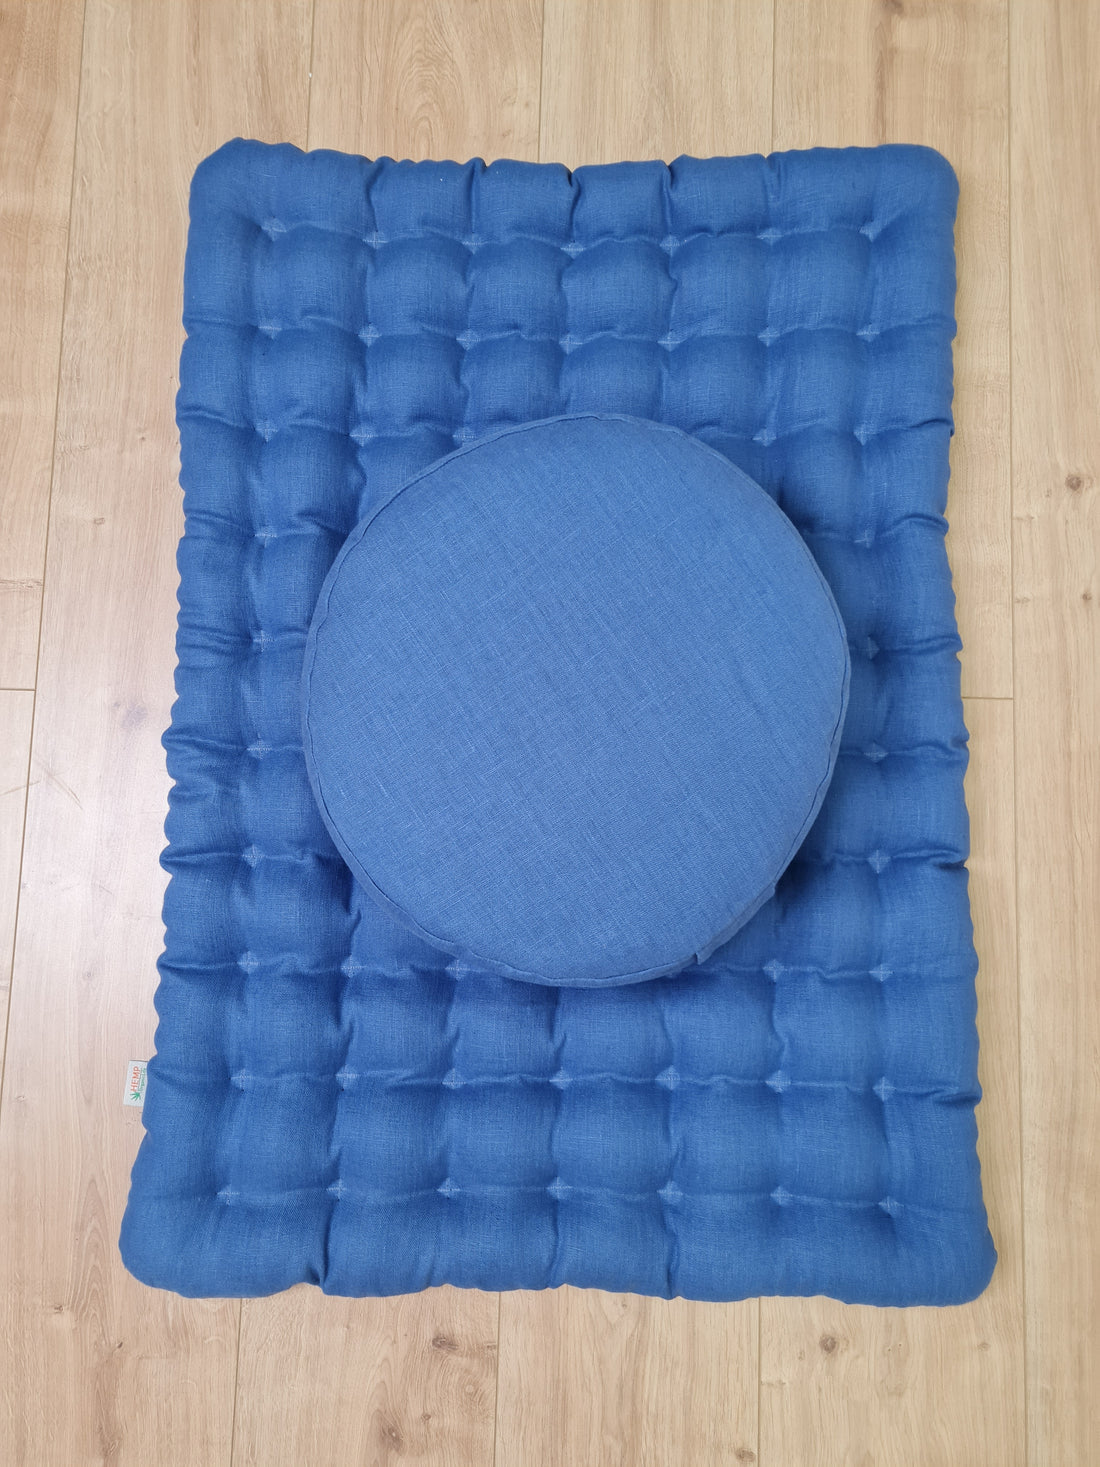 Zafu Linen floor cushion with Buckwheat hulls /Organic Meditation cushion/buckwheat/ pillow seat/Meditation cushion for Yoga studio